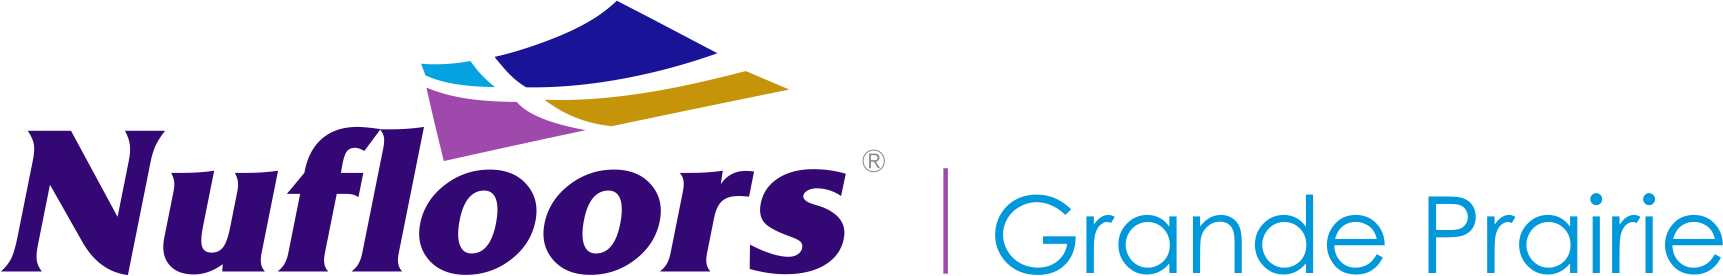 Nufloors Grande Prarie Secondary Logo